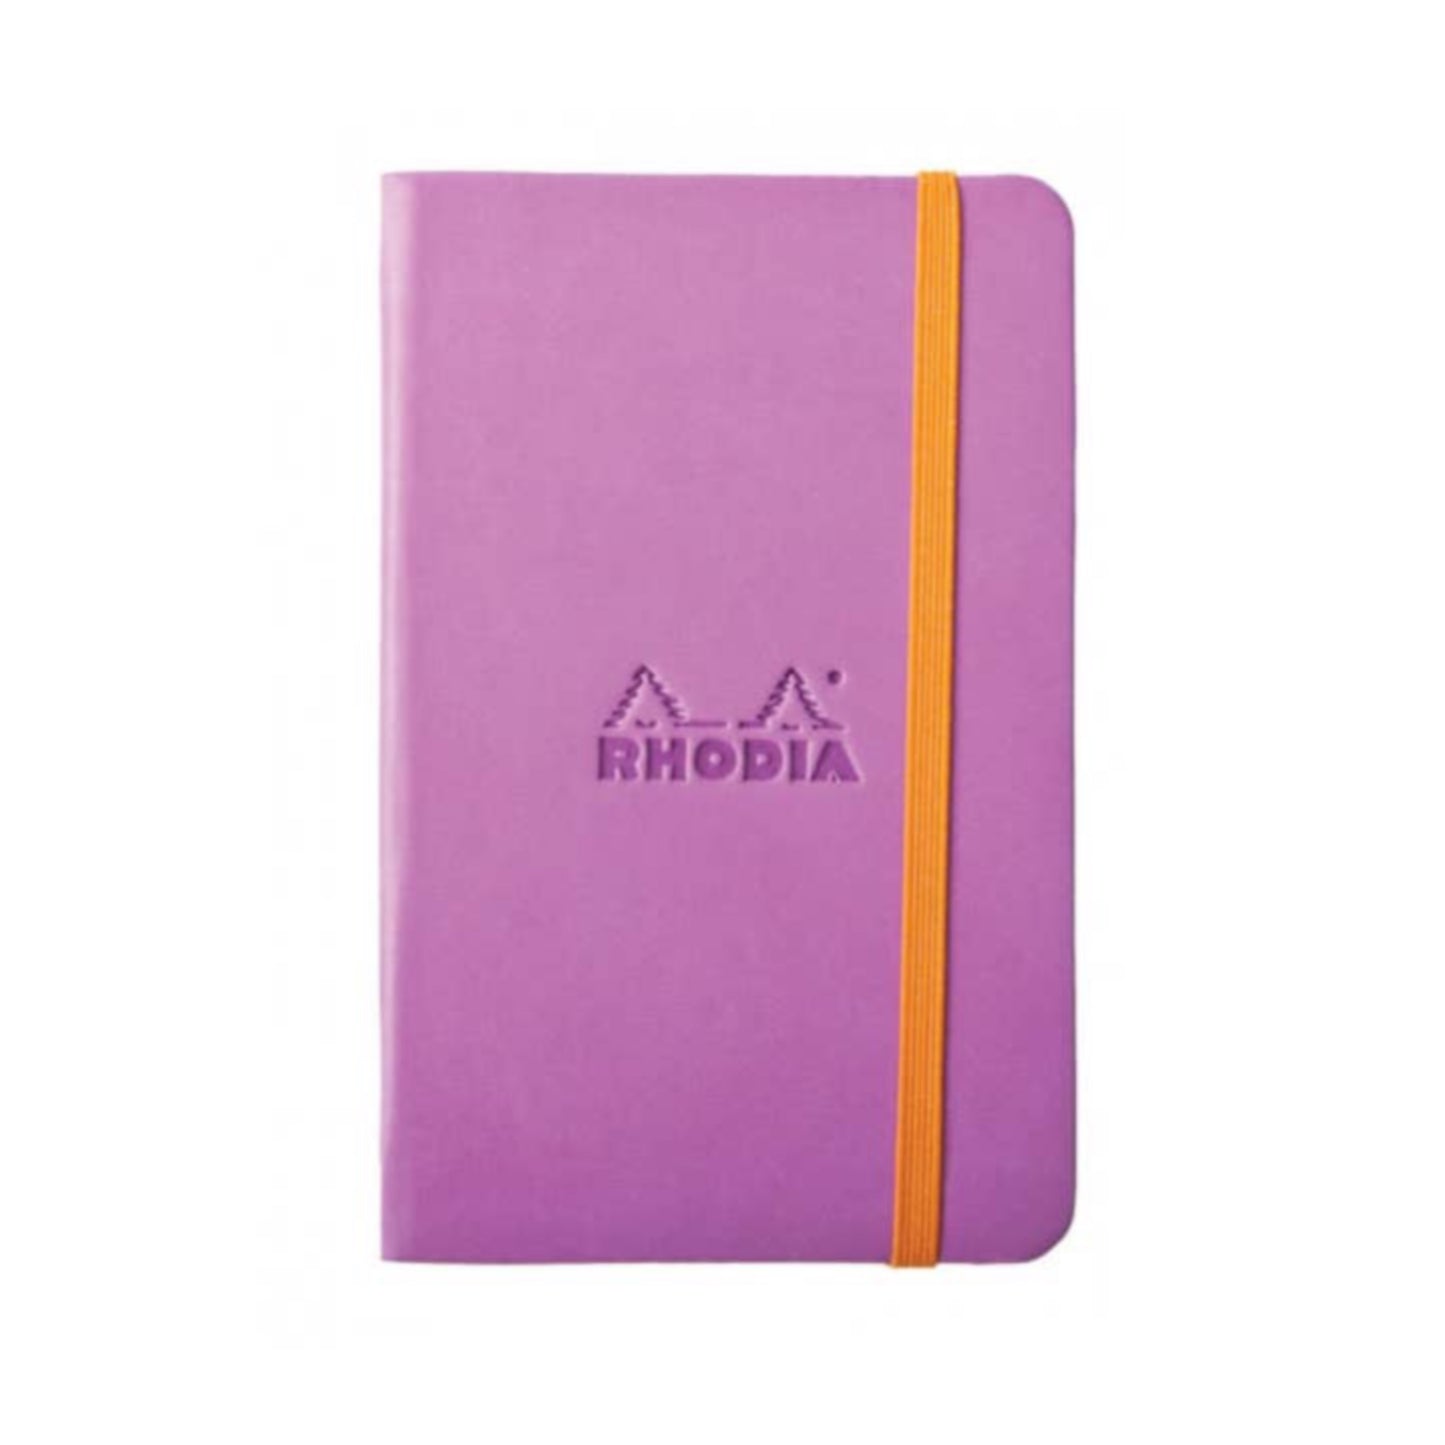 Rhodia Rhodiarama Hardcover Webnotebook - 5.5 x 8.5 inches - Lilac / - Blank Paper by Rhodia - K. A. Artist Shop